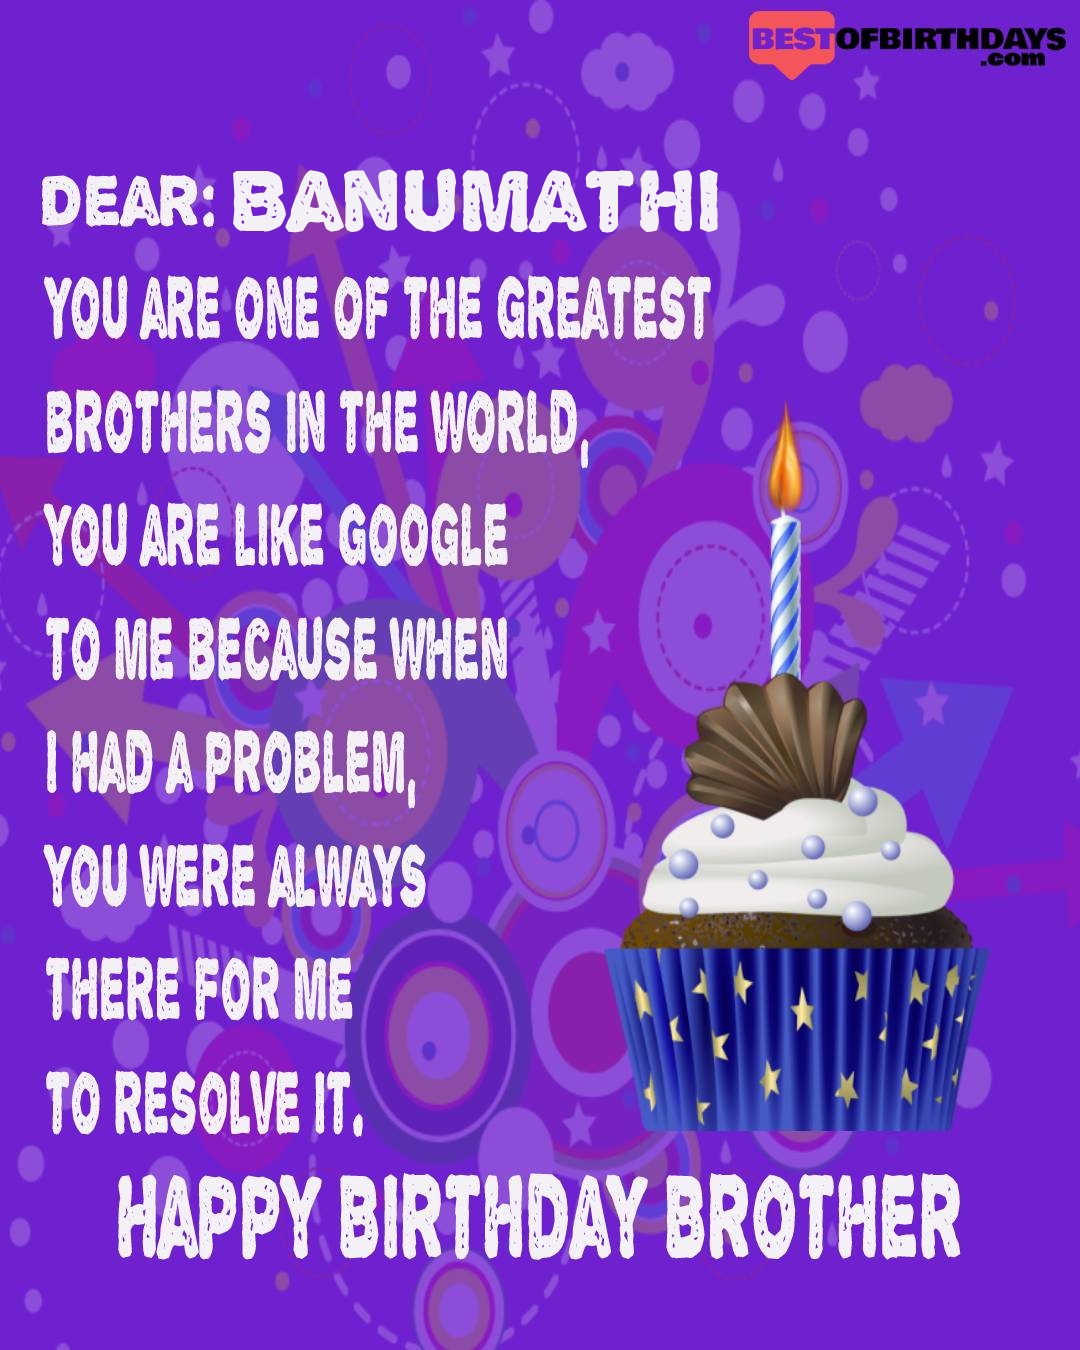 Happy birthday banumathi bhai brother bro